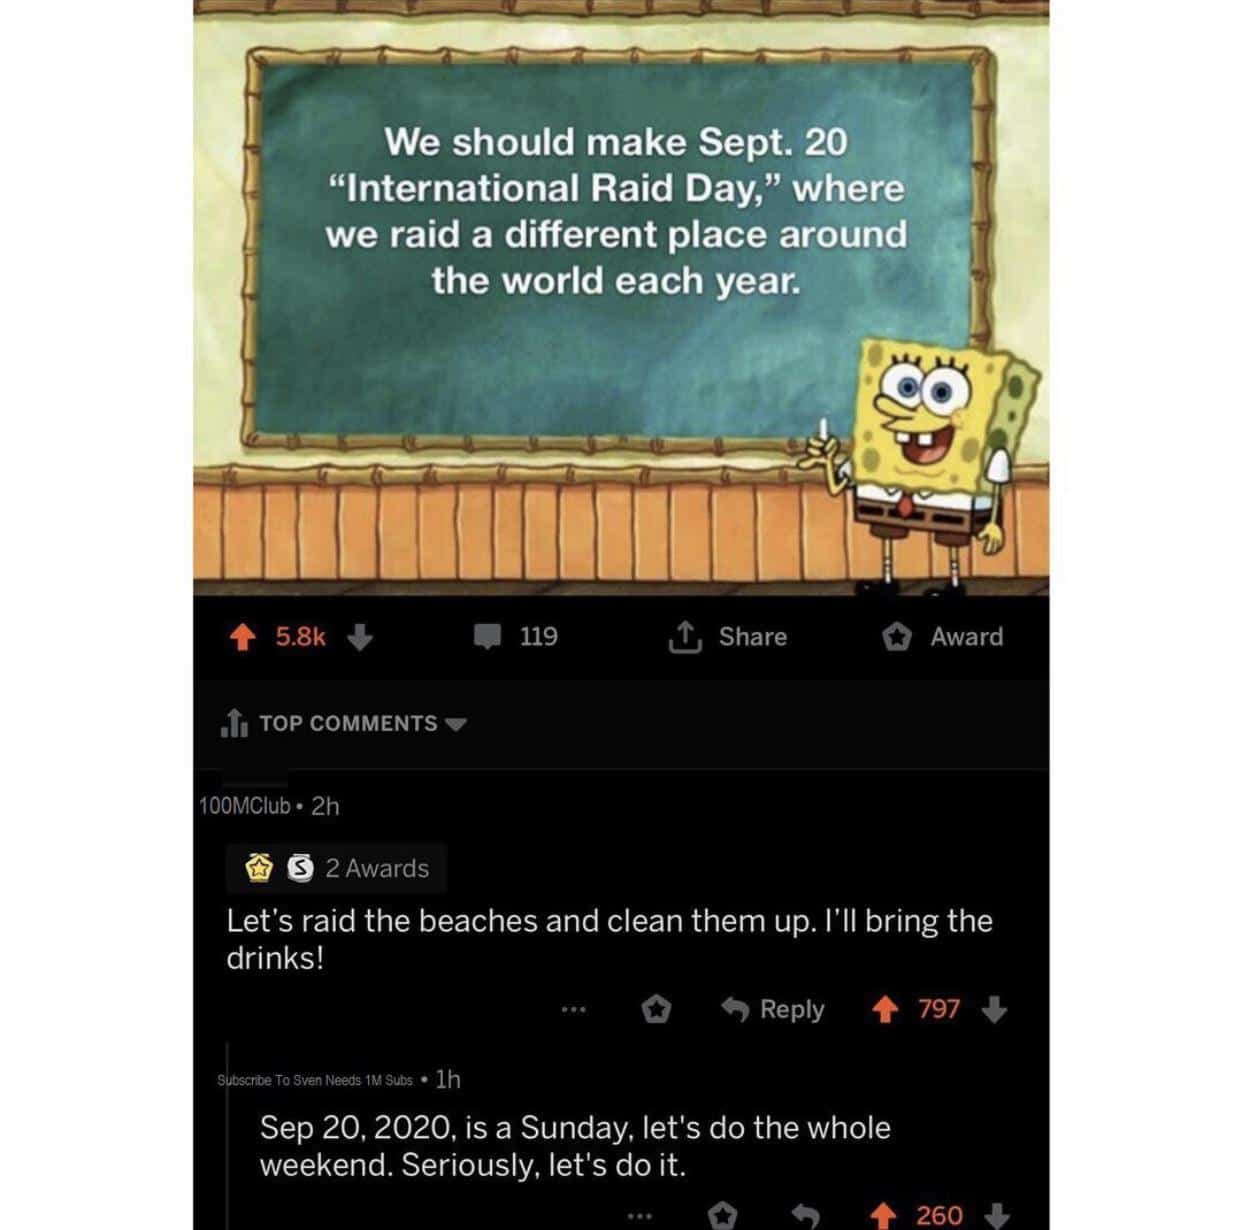 spongebob spongebob-memes spongebob text: We should make Sept. 20 